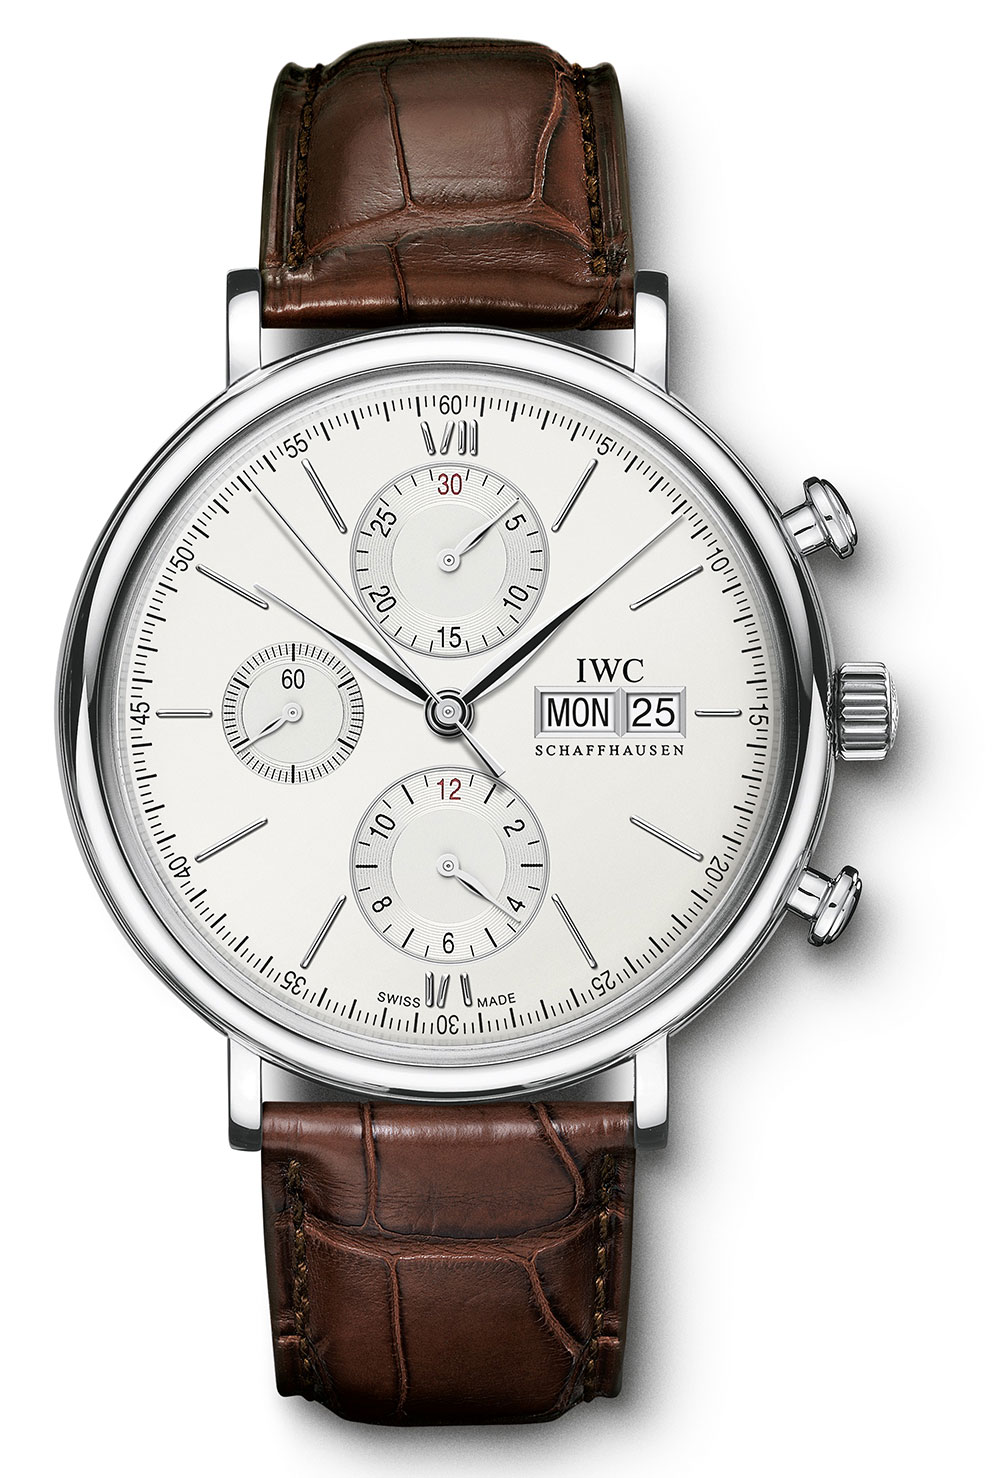 IWC Portofino Chronograph watch as worn by Jason Bateman